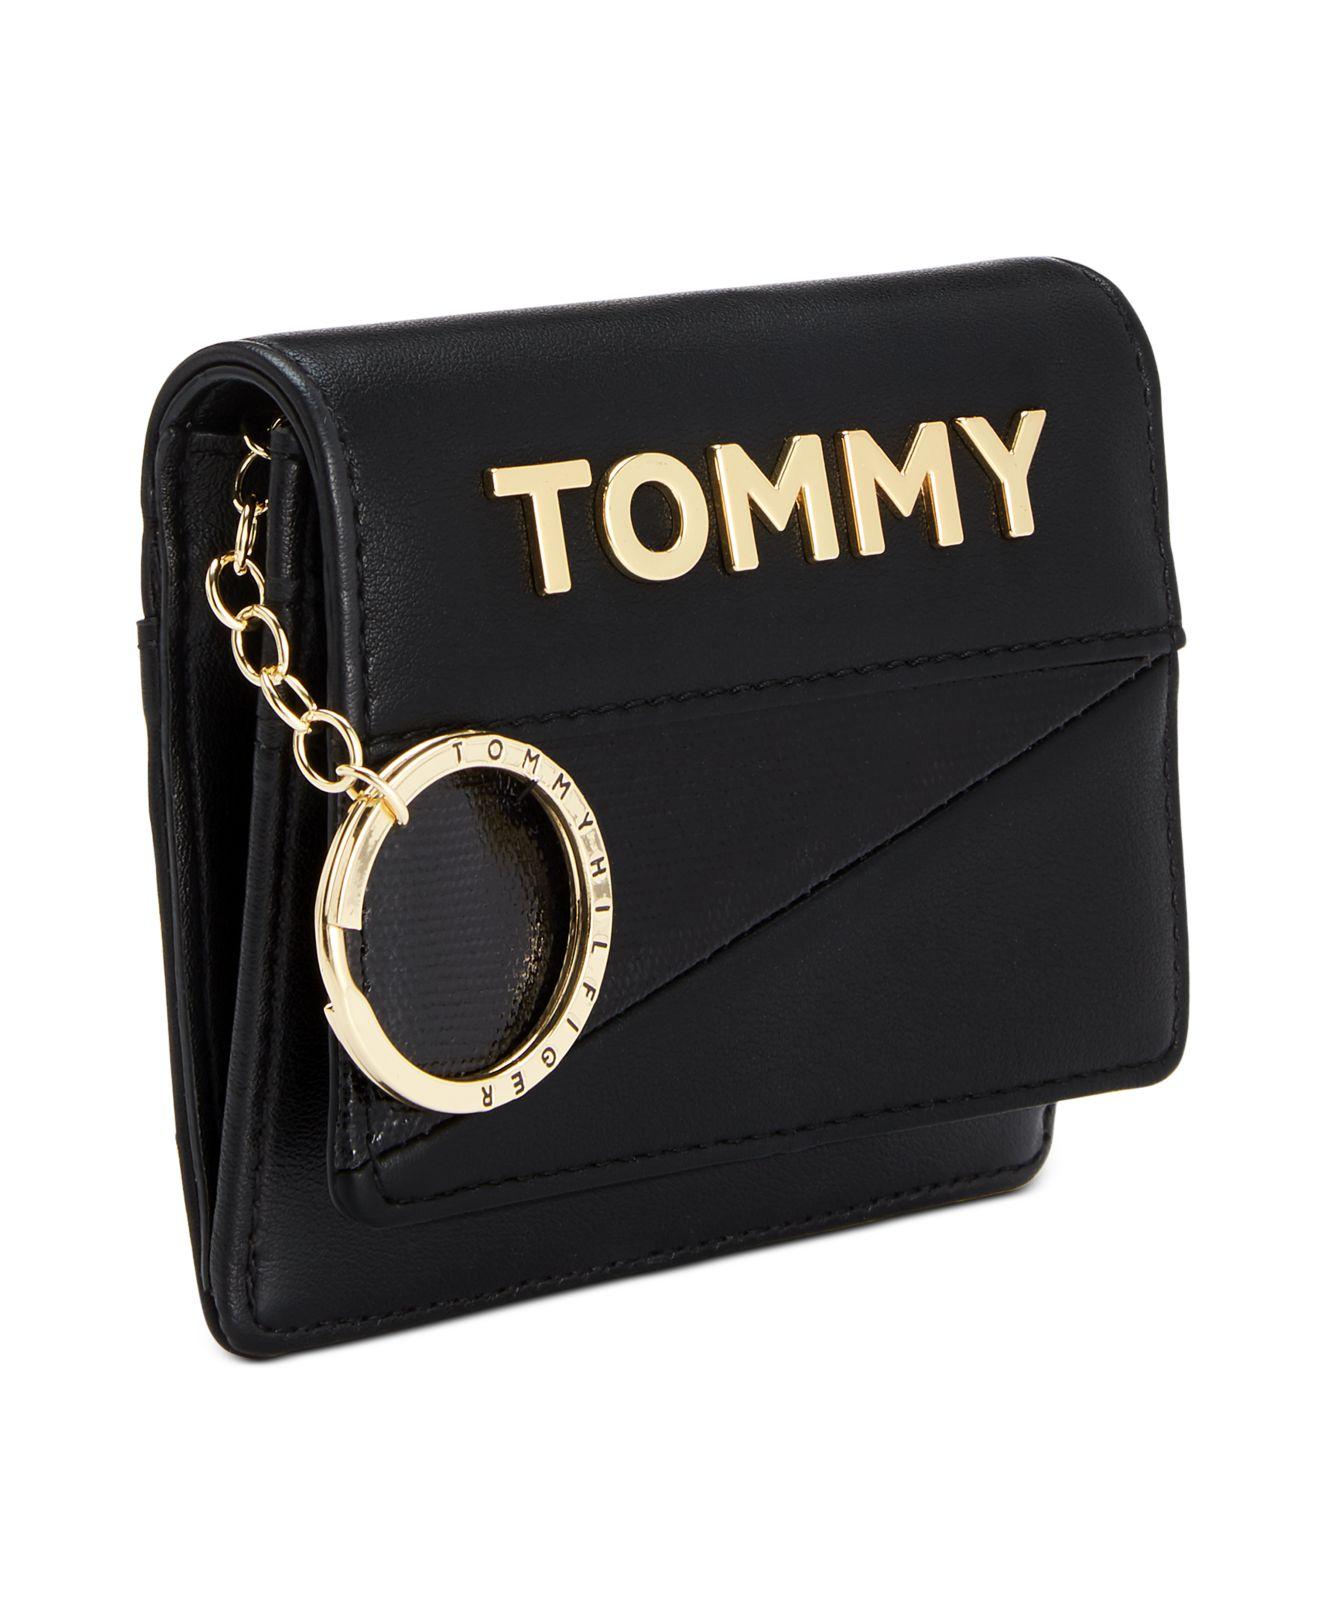 tommy purse